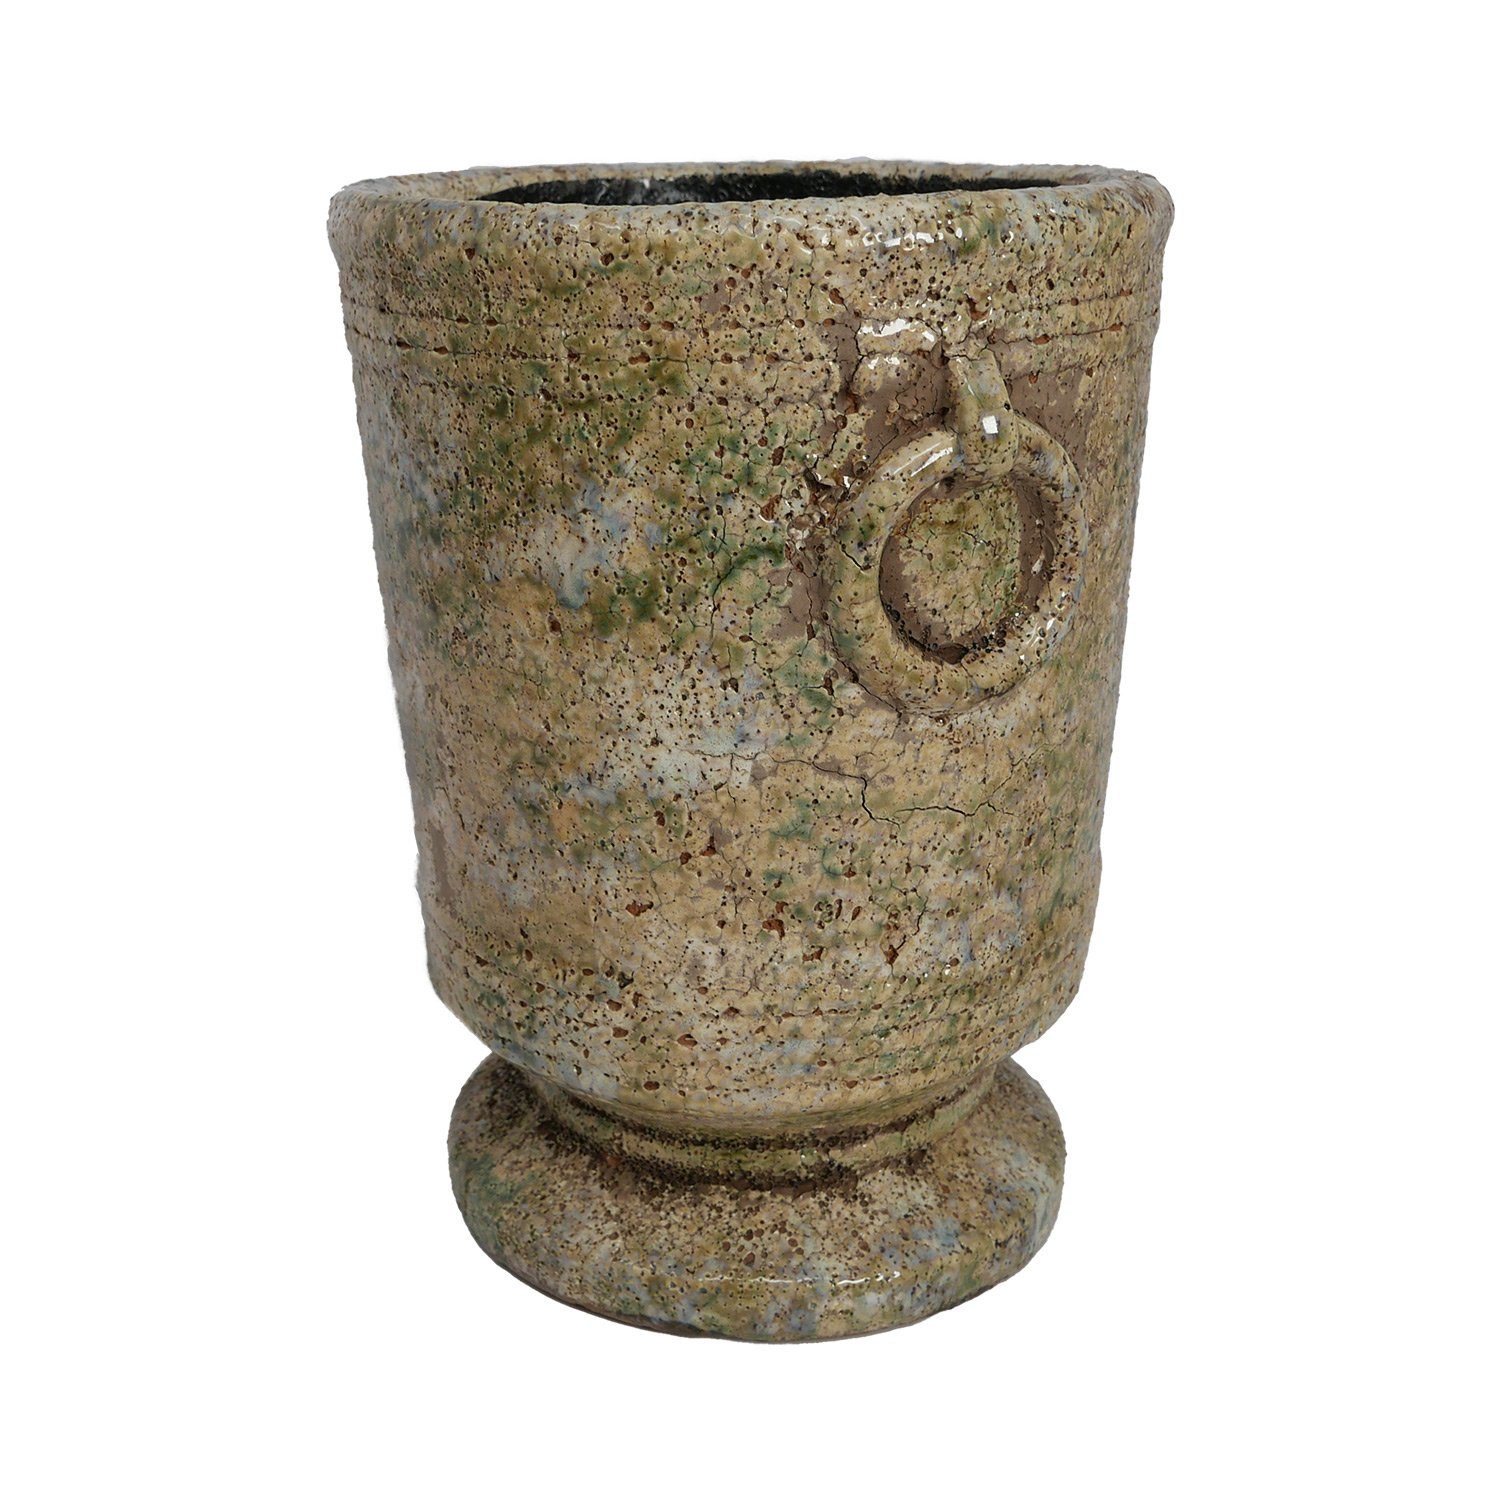 B&S Pflanzkübel Blumenkübel Vase Pokal im Antik Shabby Steinoptik H x Ø: 17.5 x 12 cm | Pflanzkübel